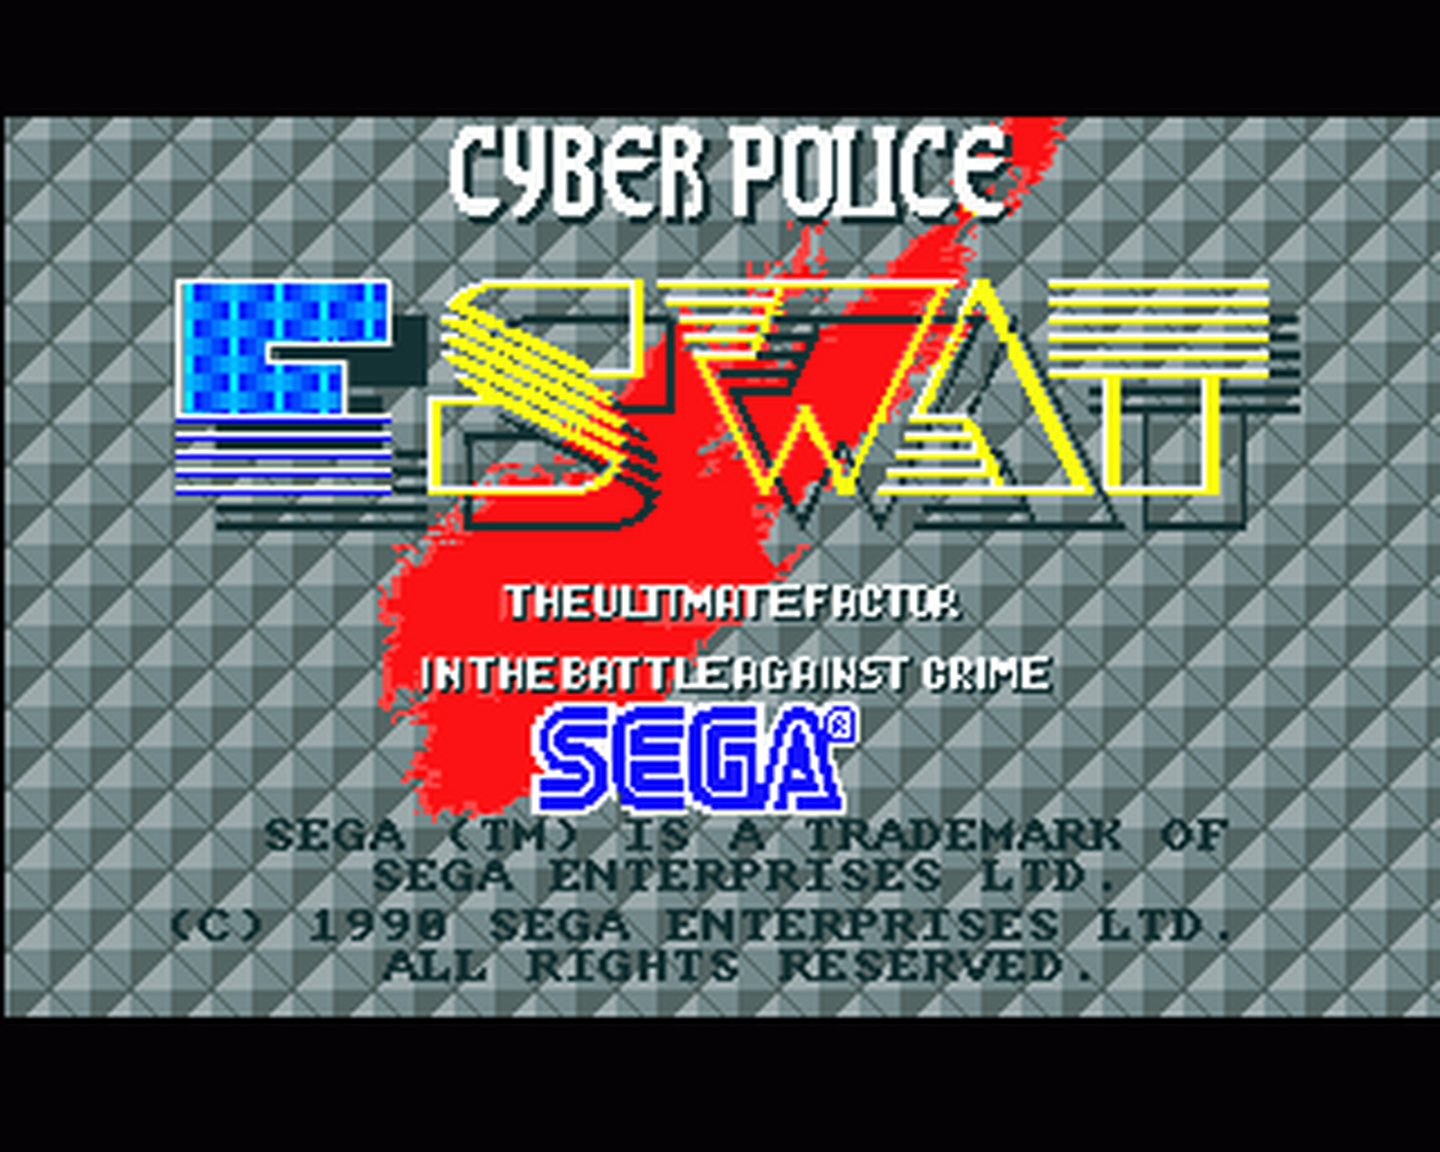 Amiga GameBase ESWAT_-_Cyber_Police Sega_-_U.S._Gold 1991